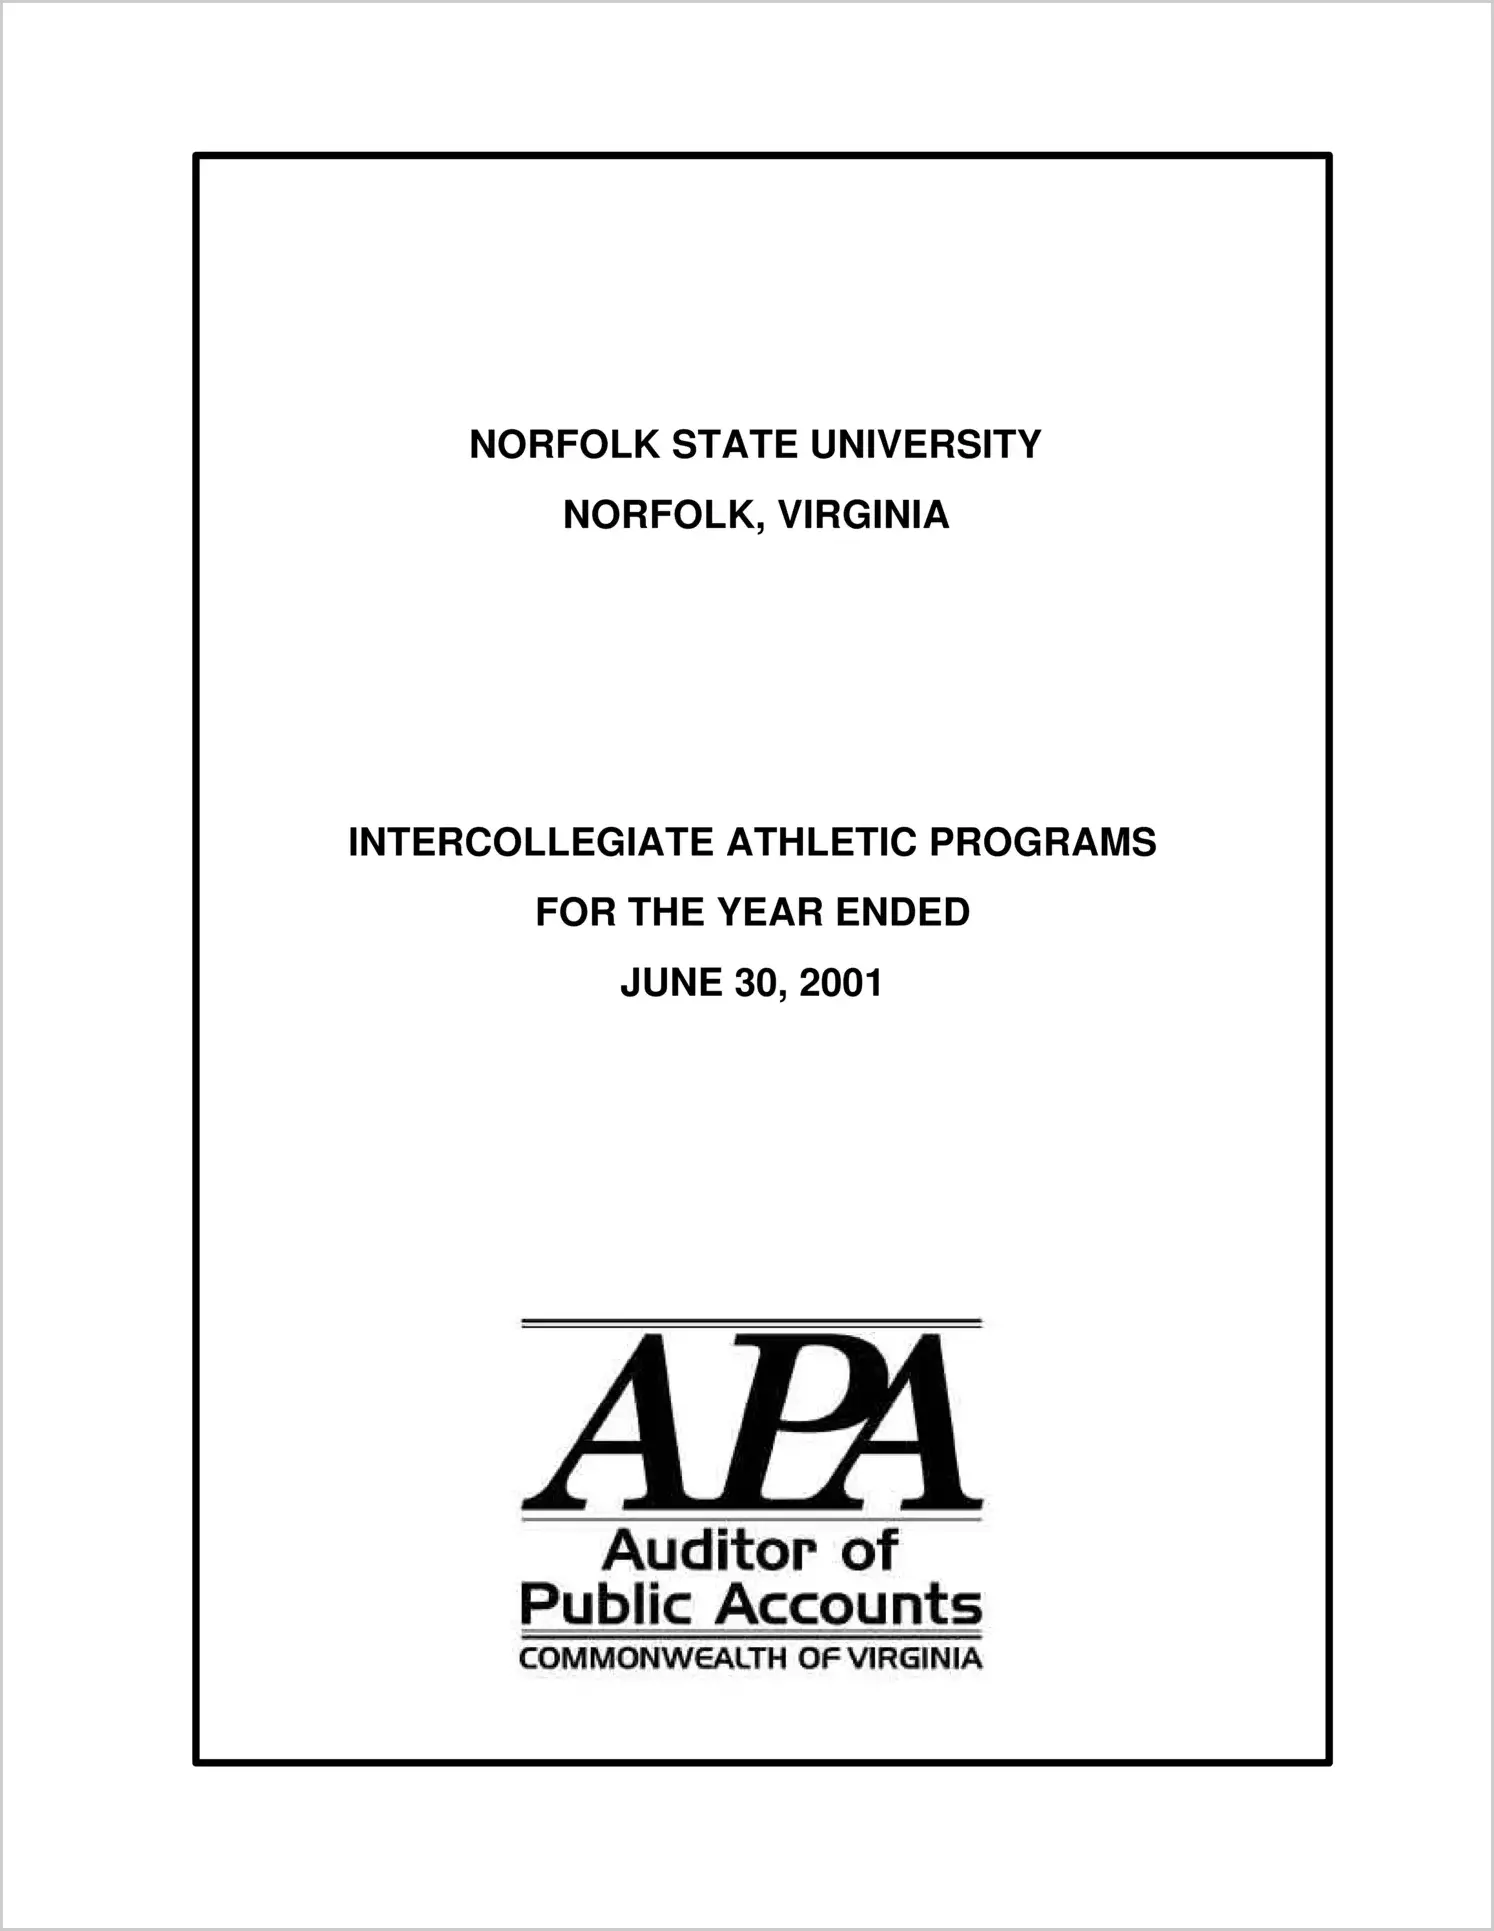 Norfolk State University Intercollegiate Athletic Programs for the year ended June 30, 2001